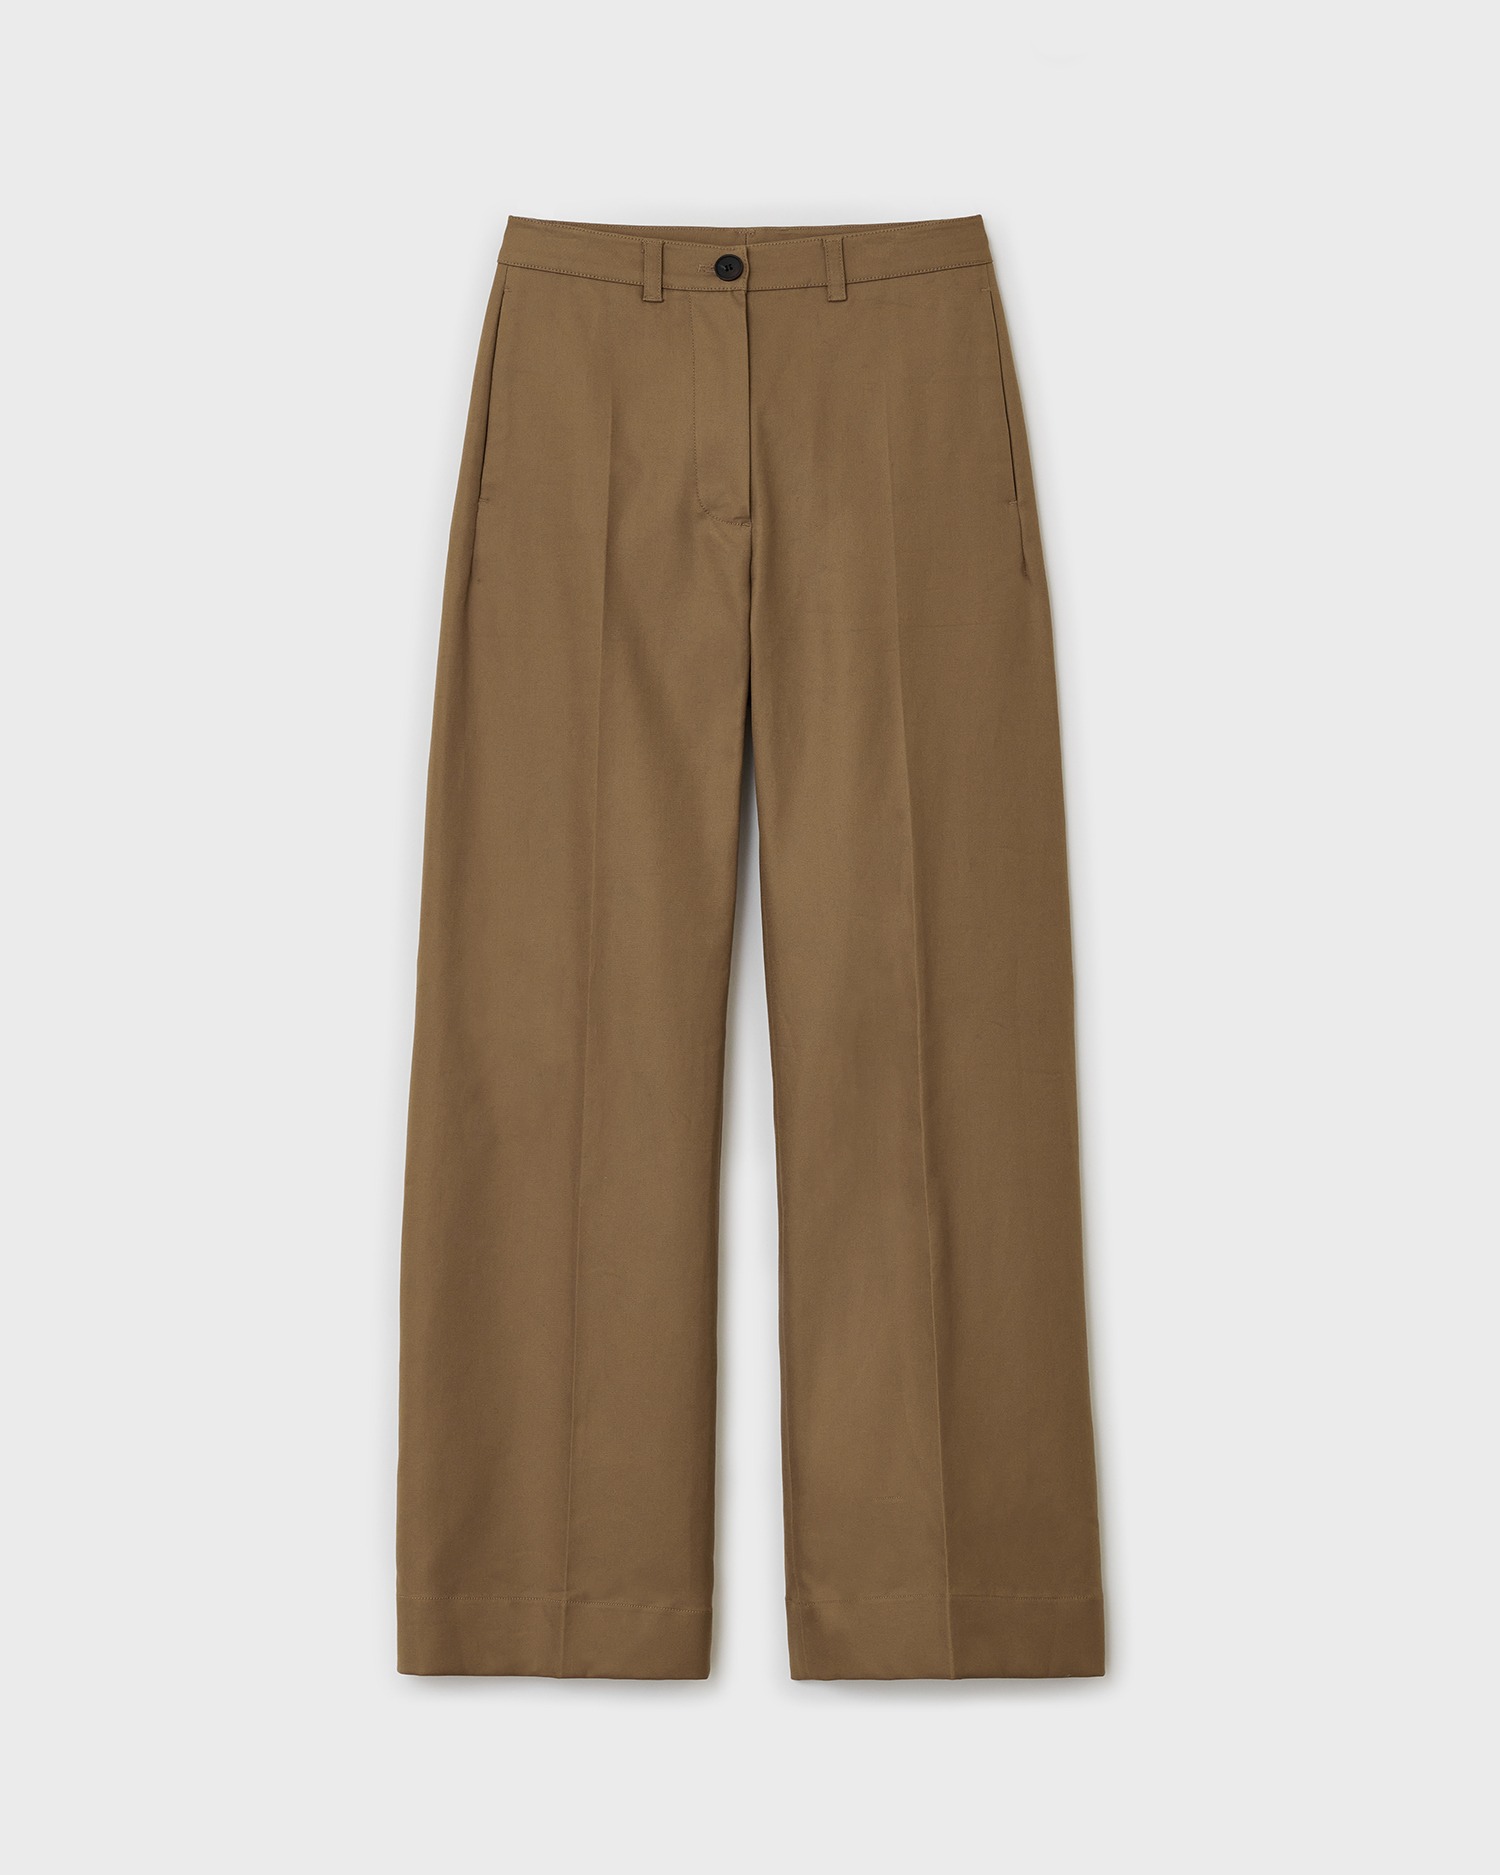 Ludhiana Premium Cotton Pants - Camel Beige